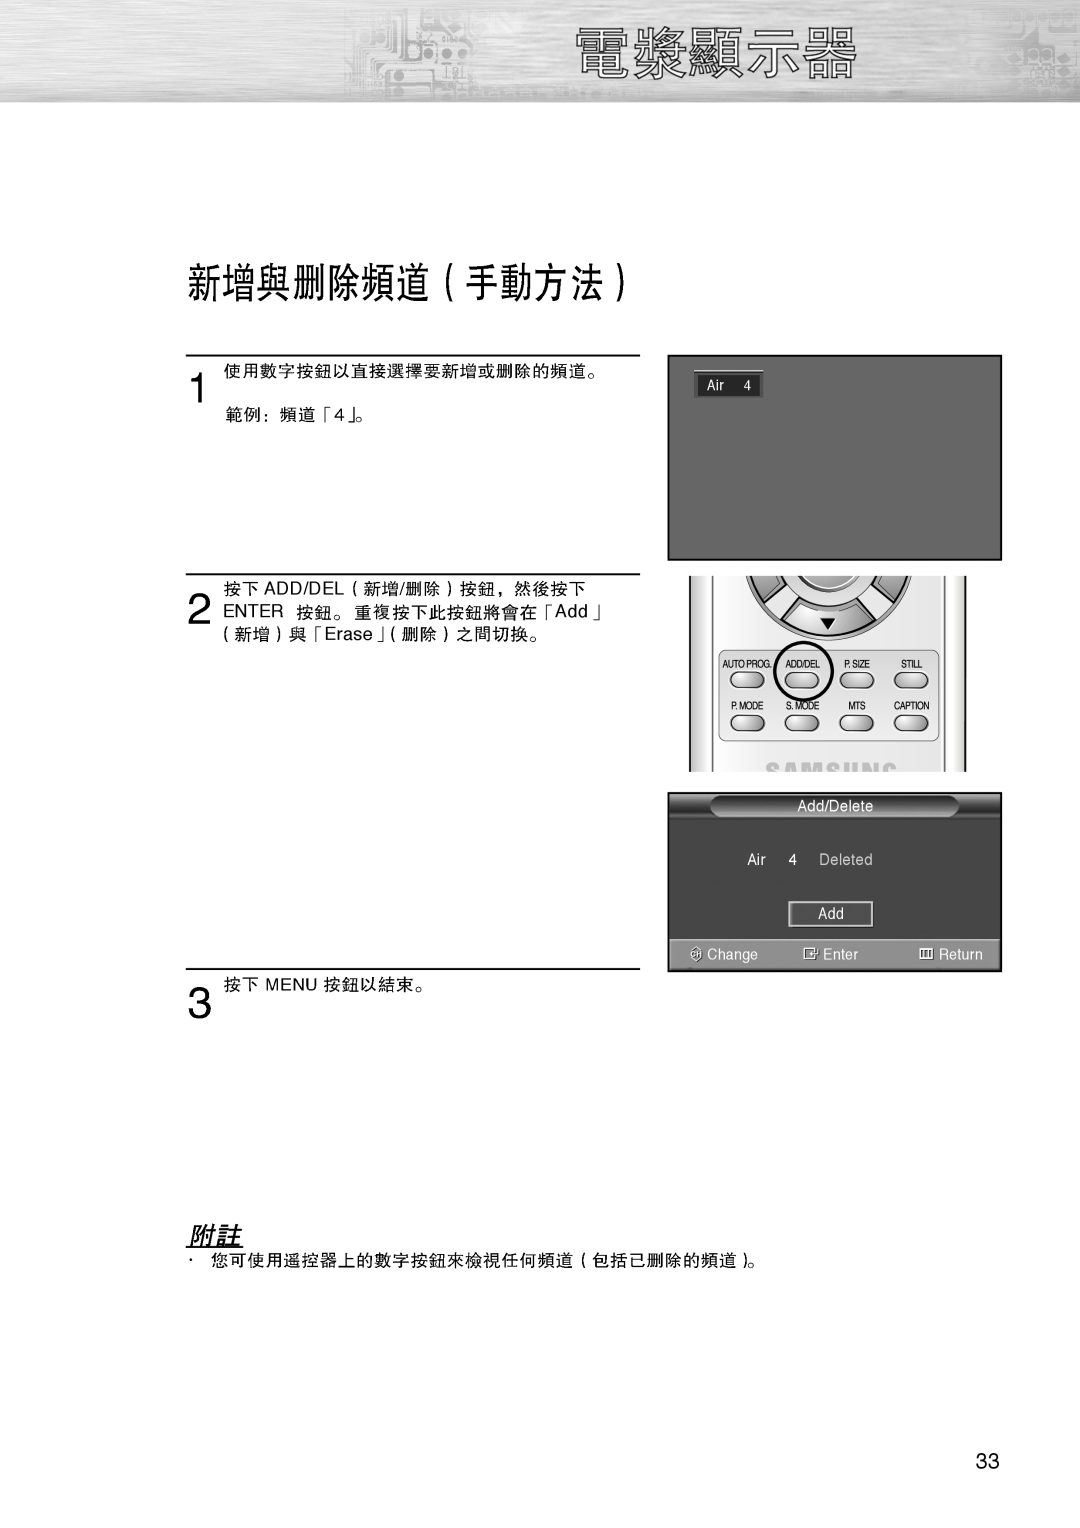 Samsung PL-42D4S manual ADD/DEL ENTER Add Erase, Air 4 Deleted 